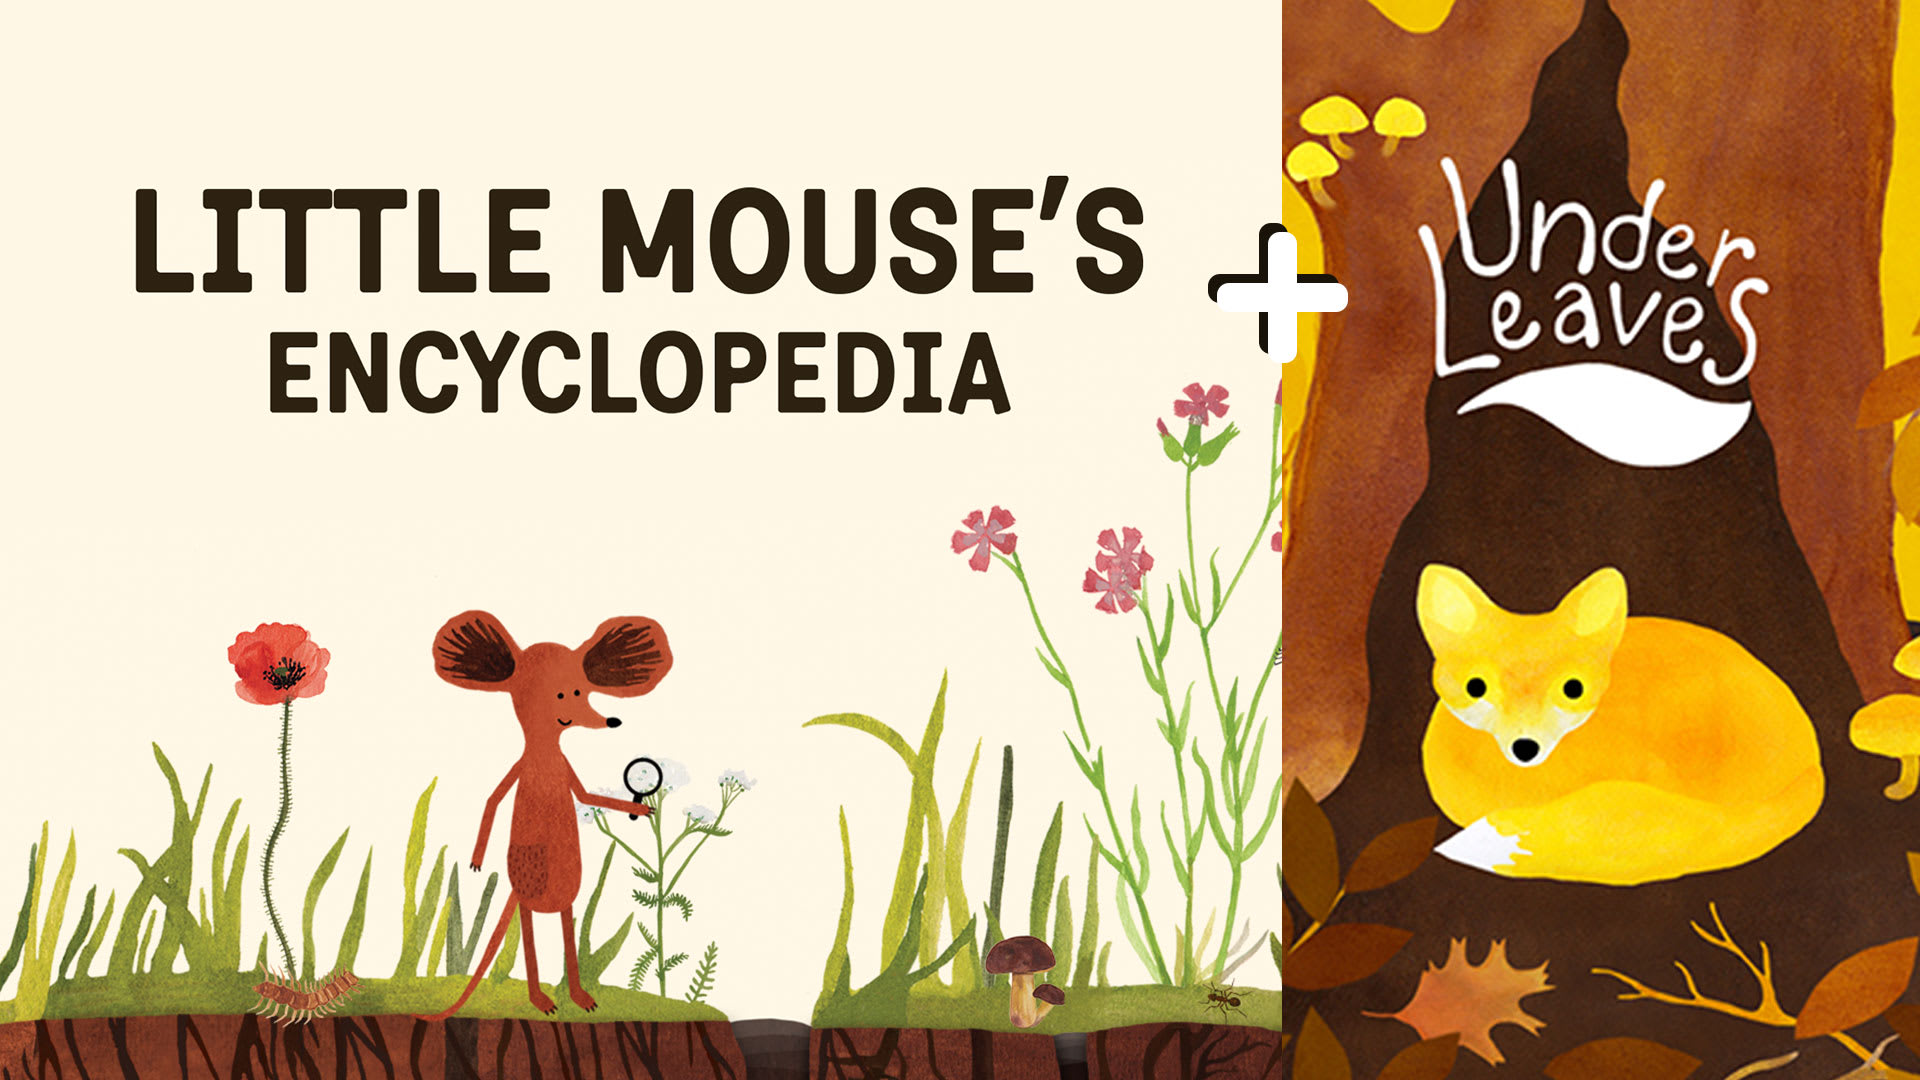 Little Mouse's Encyclopedia + Under Leaves